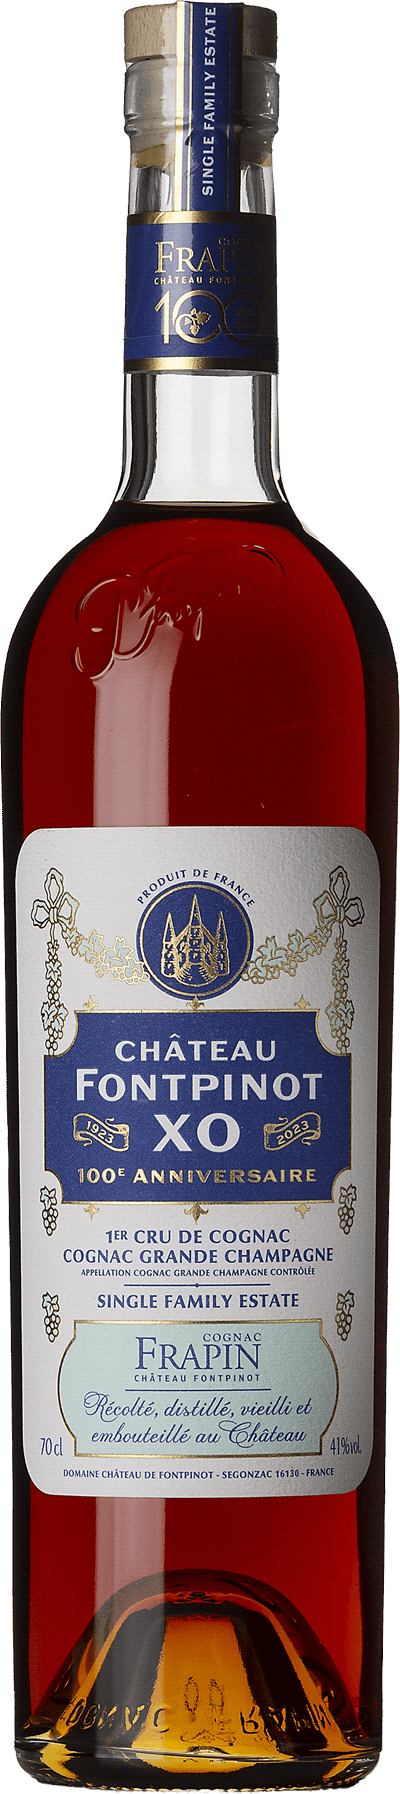 Chateau Fontpinot XO limited edition 100e anniversaire